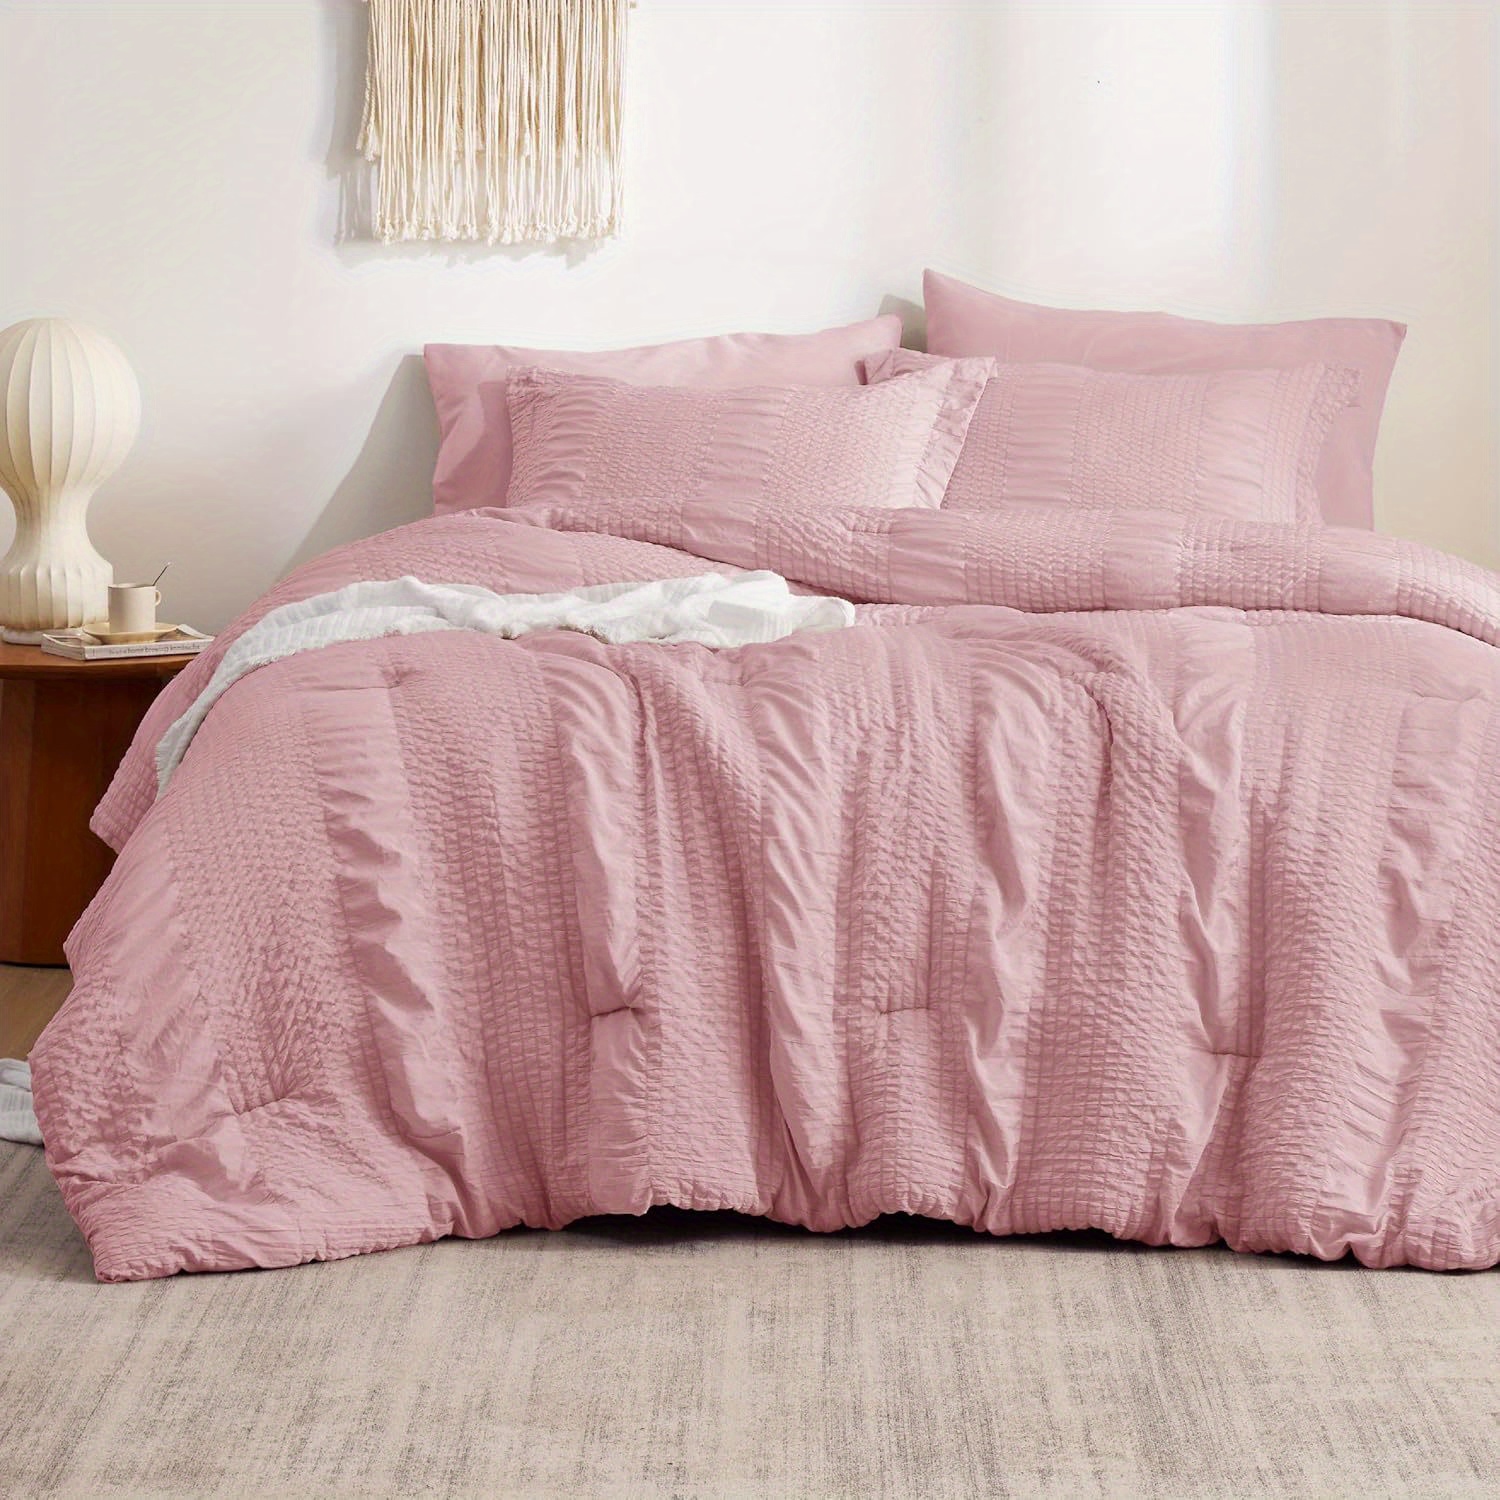 

5pcs/ 7pcs Comforter Sets, Bed In A Bag Striped Seersucker Bedding Set, Soft Lightweight Down Alternative Comforter